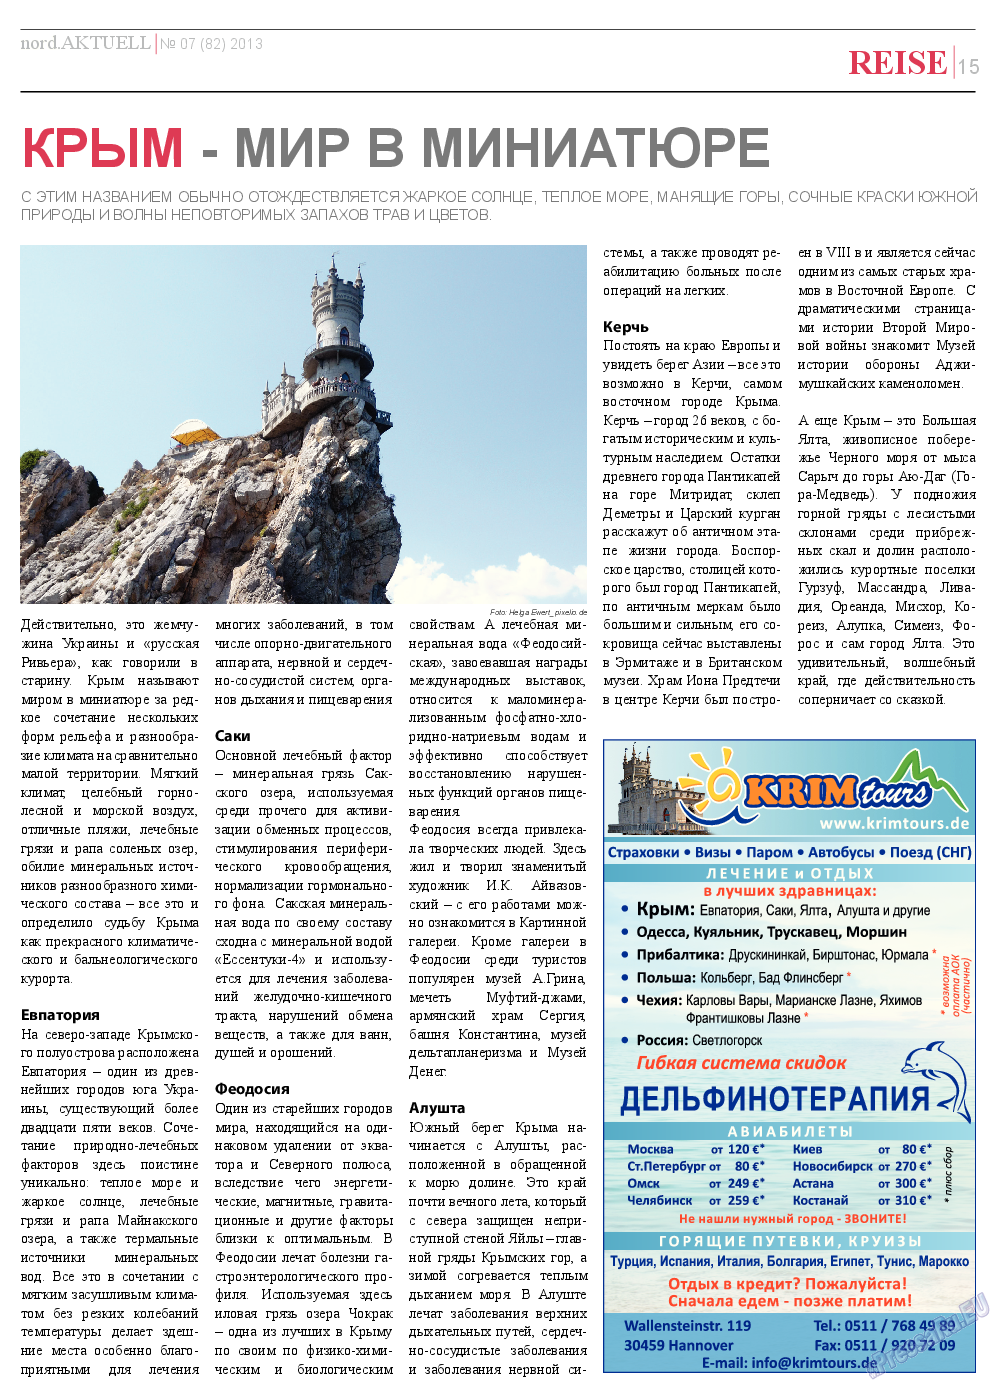 nord.Aktuell, газета. 2013 №7 стр.15